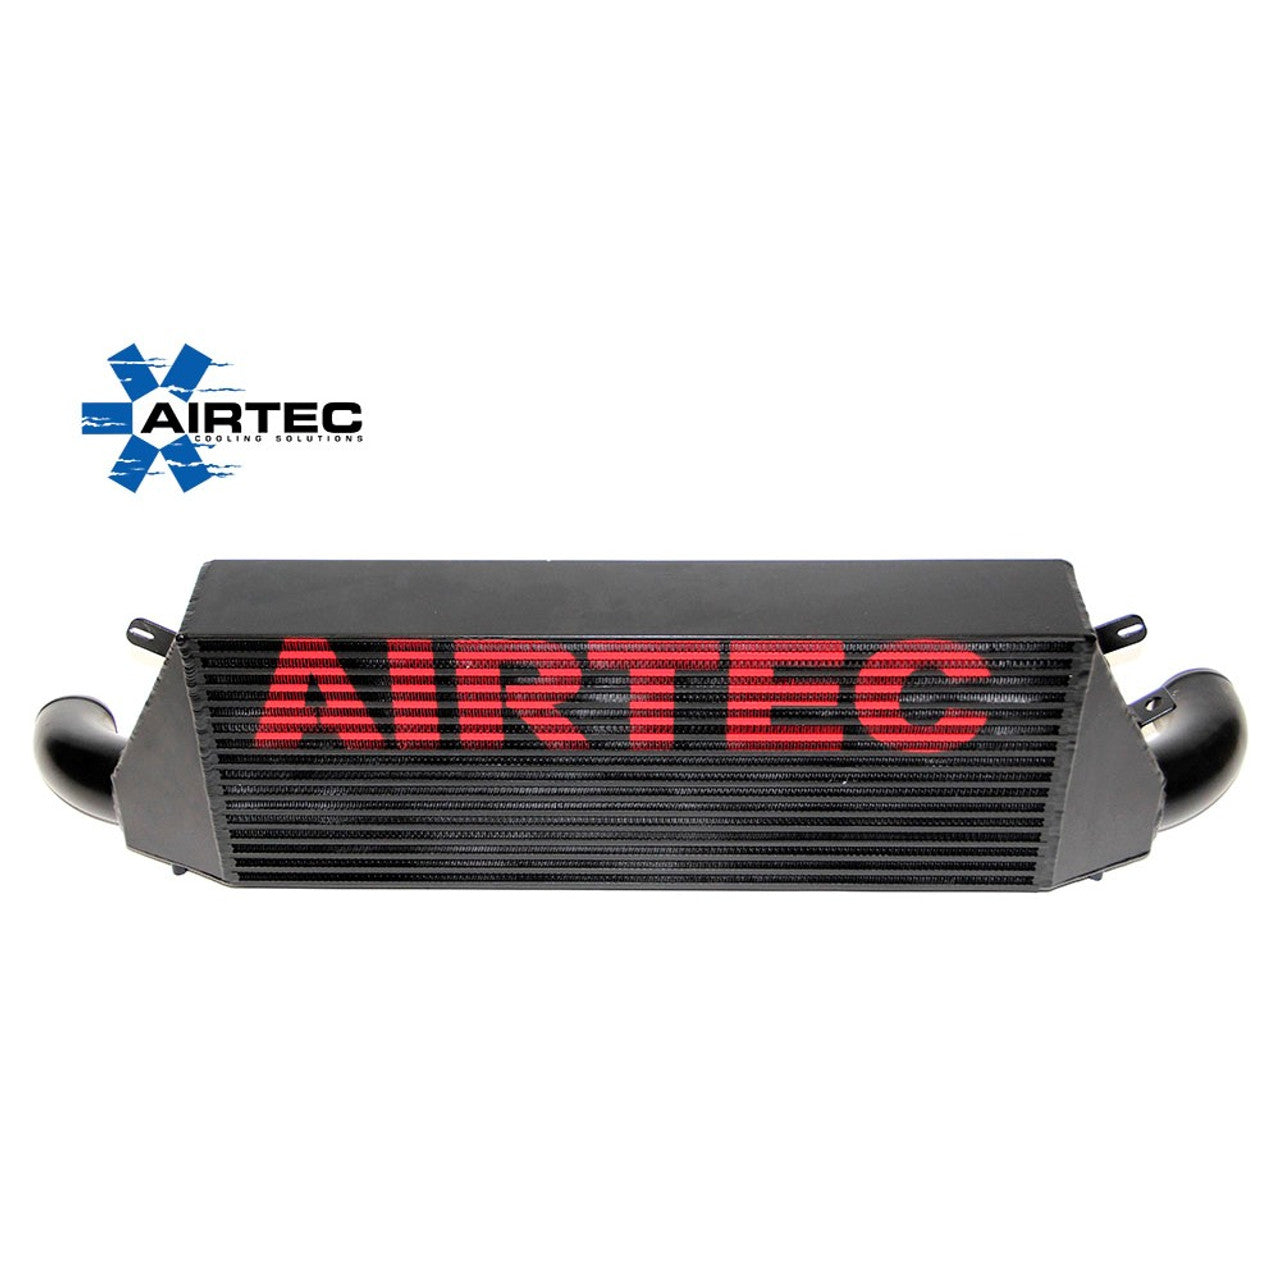 Airtec Intercooler Upgrade for RS3 8V